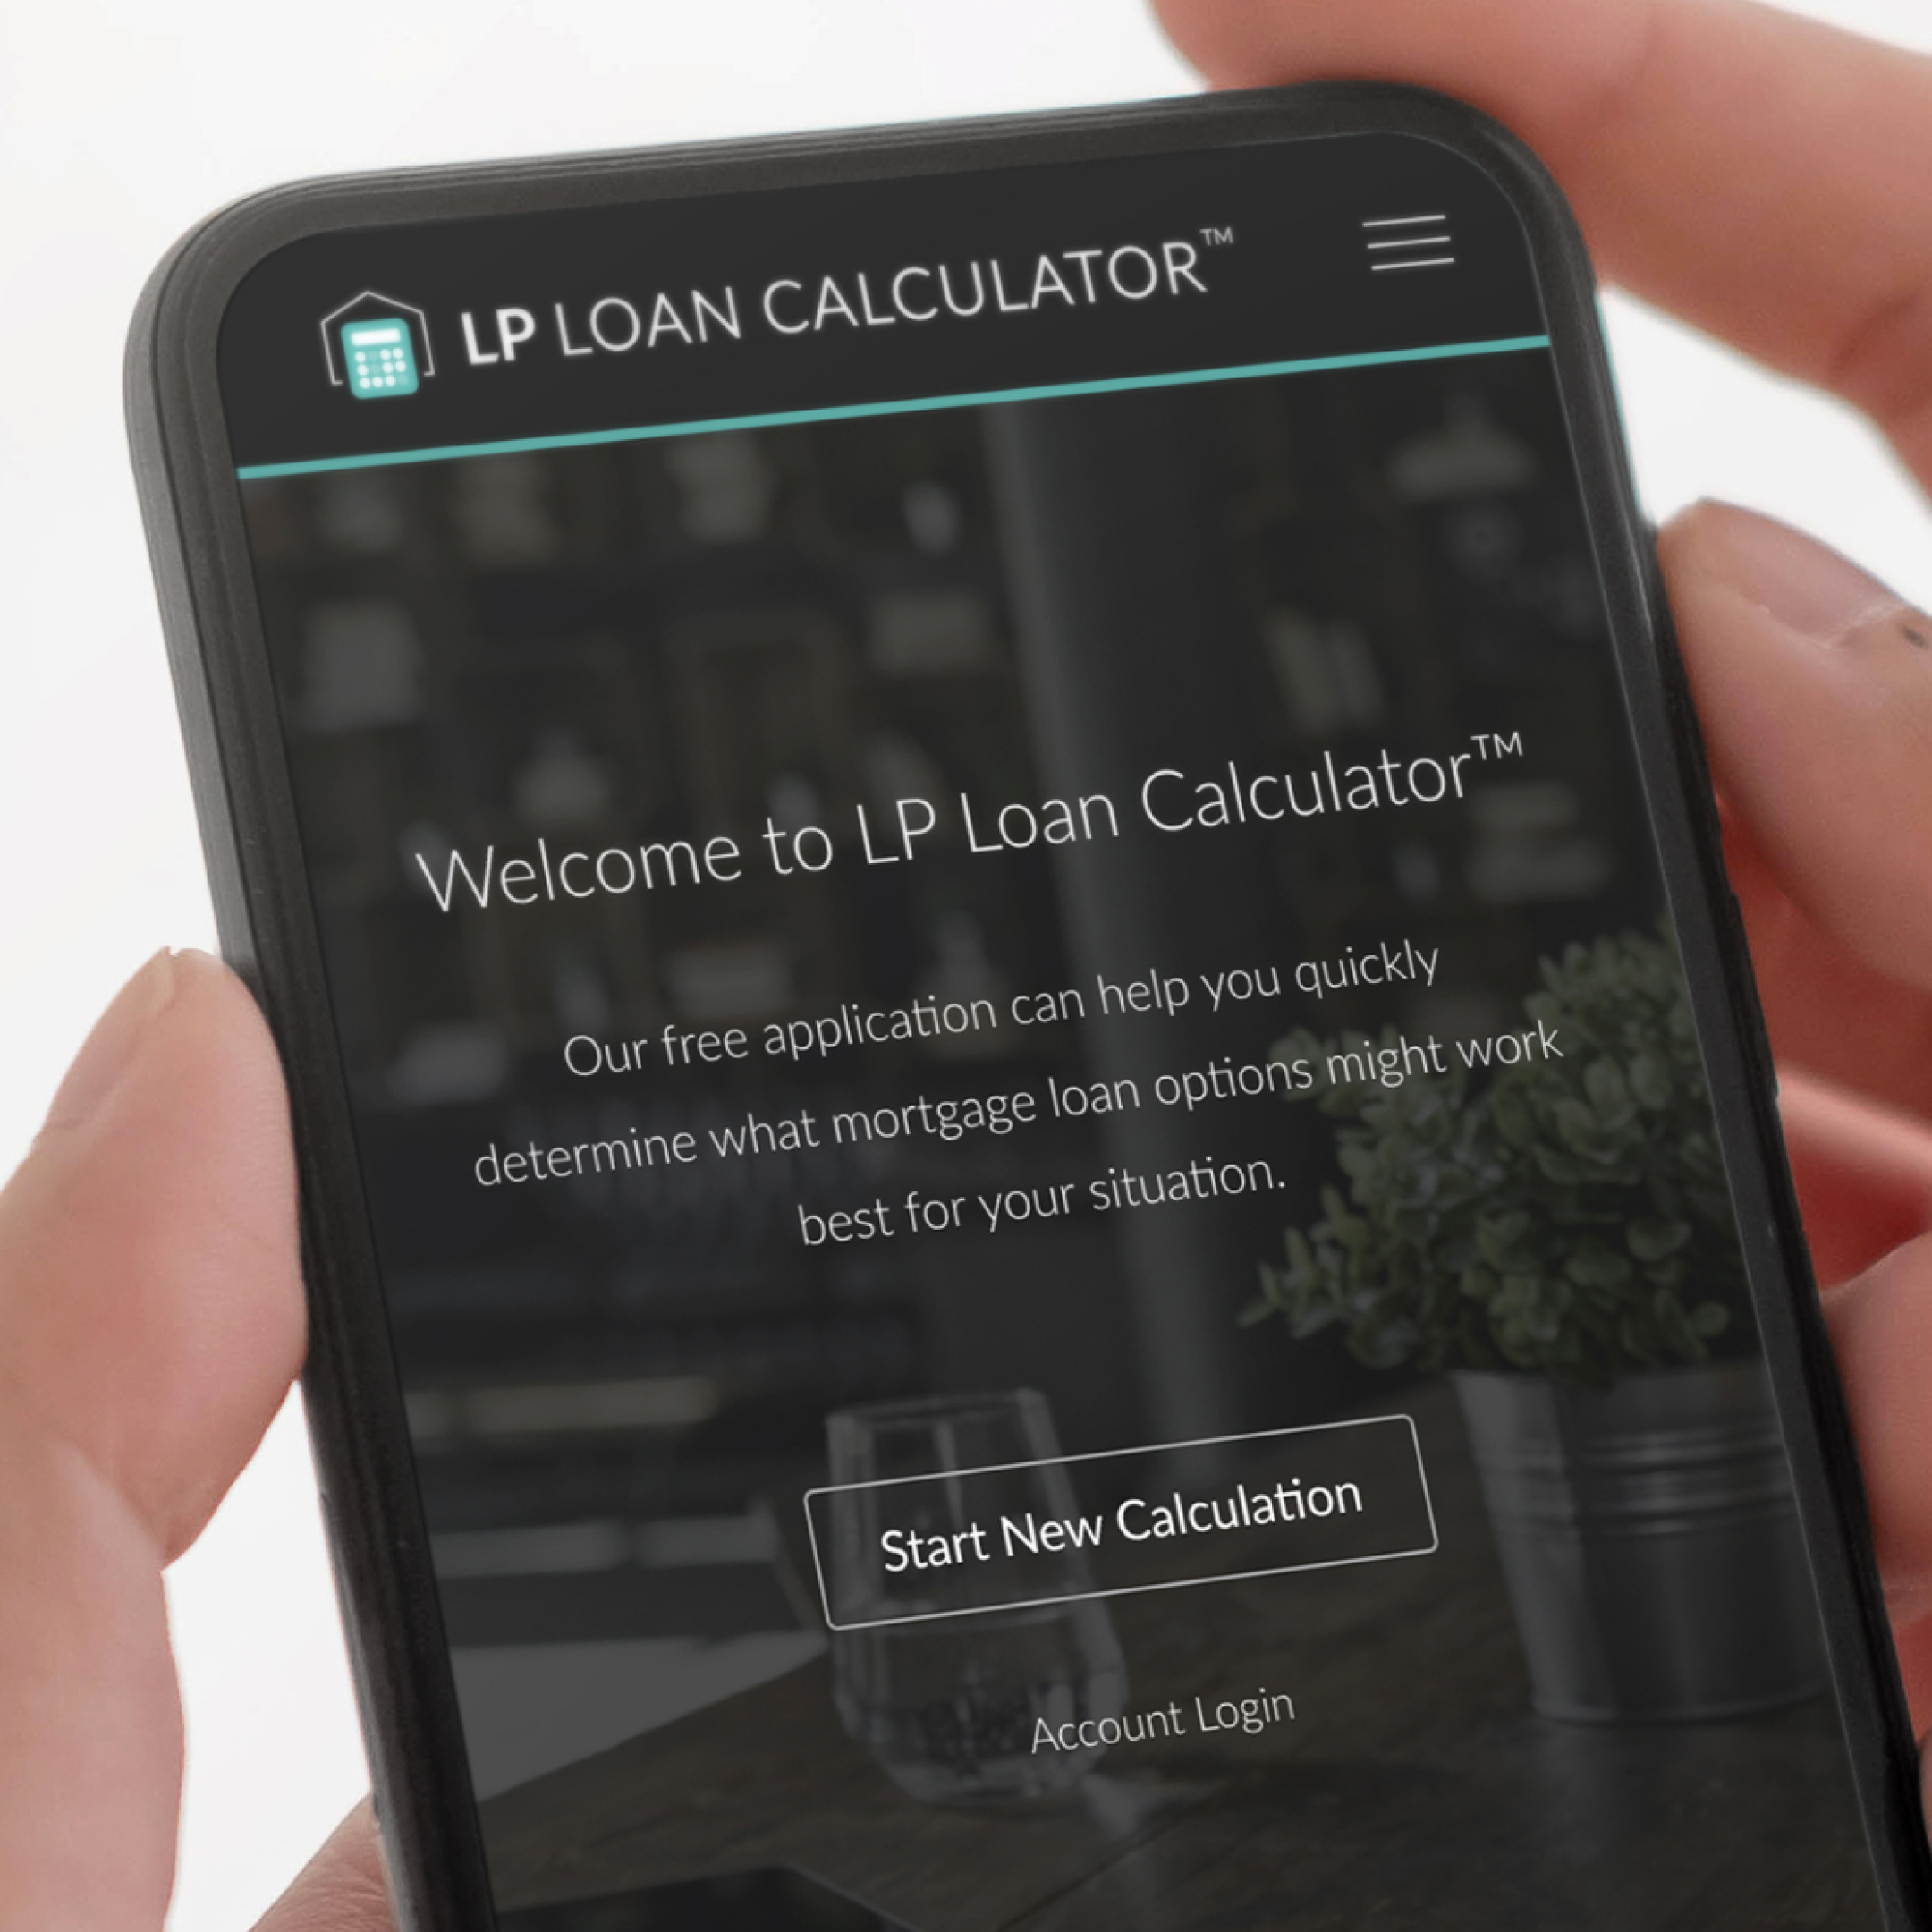 LP Loan Calculator™ Welcome Screen